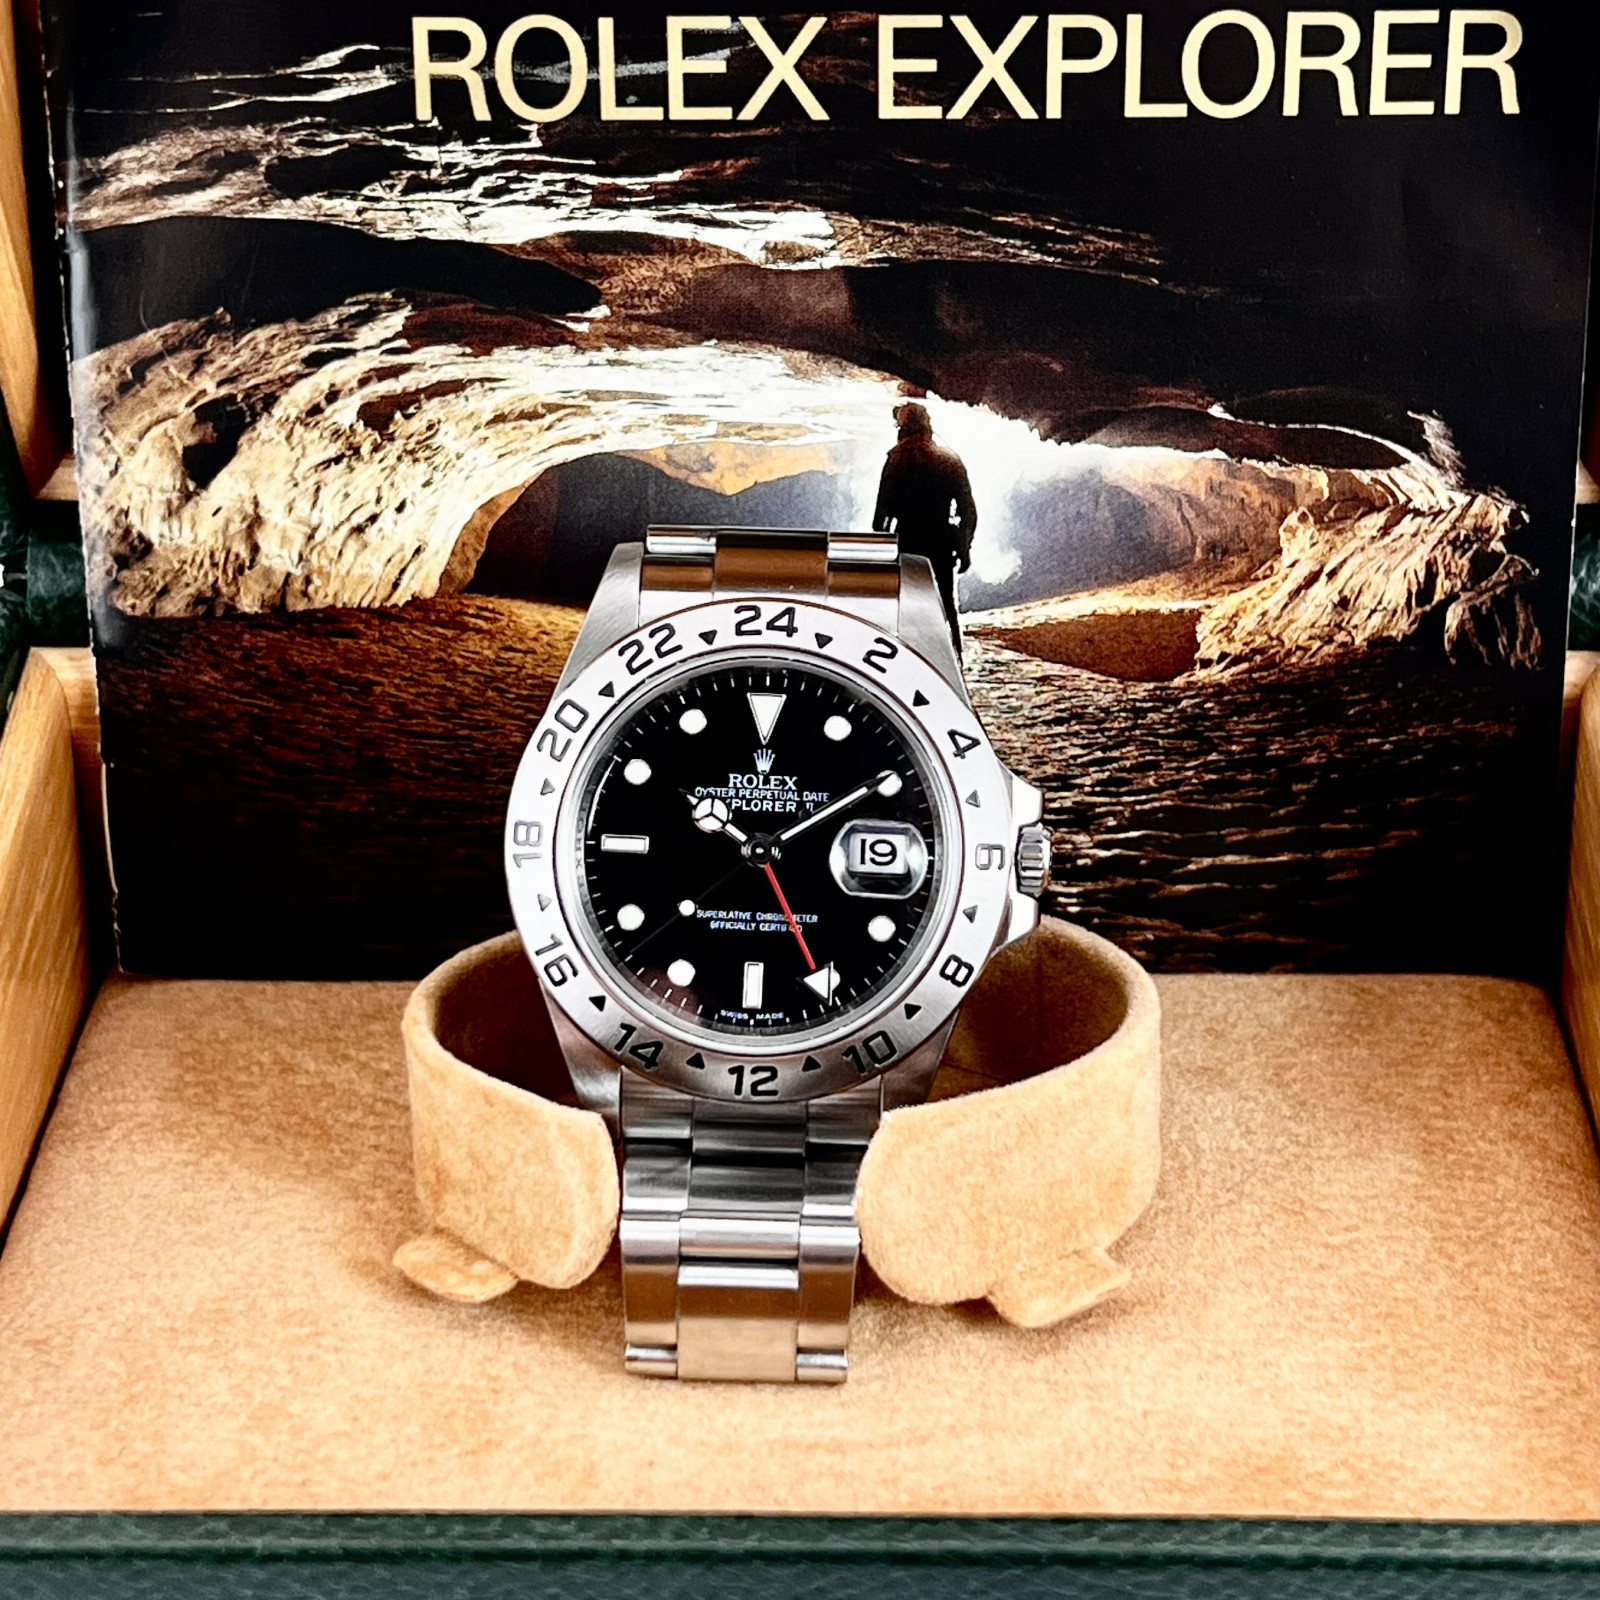 Rolex Oyster Perpetual Explorer II 16570 New Caliber 3186